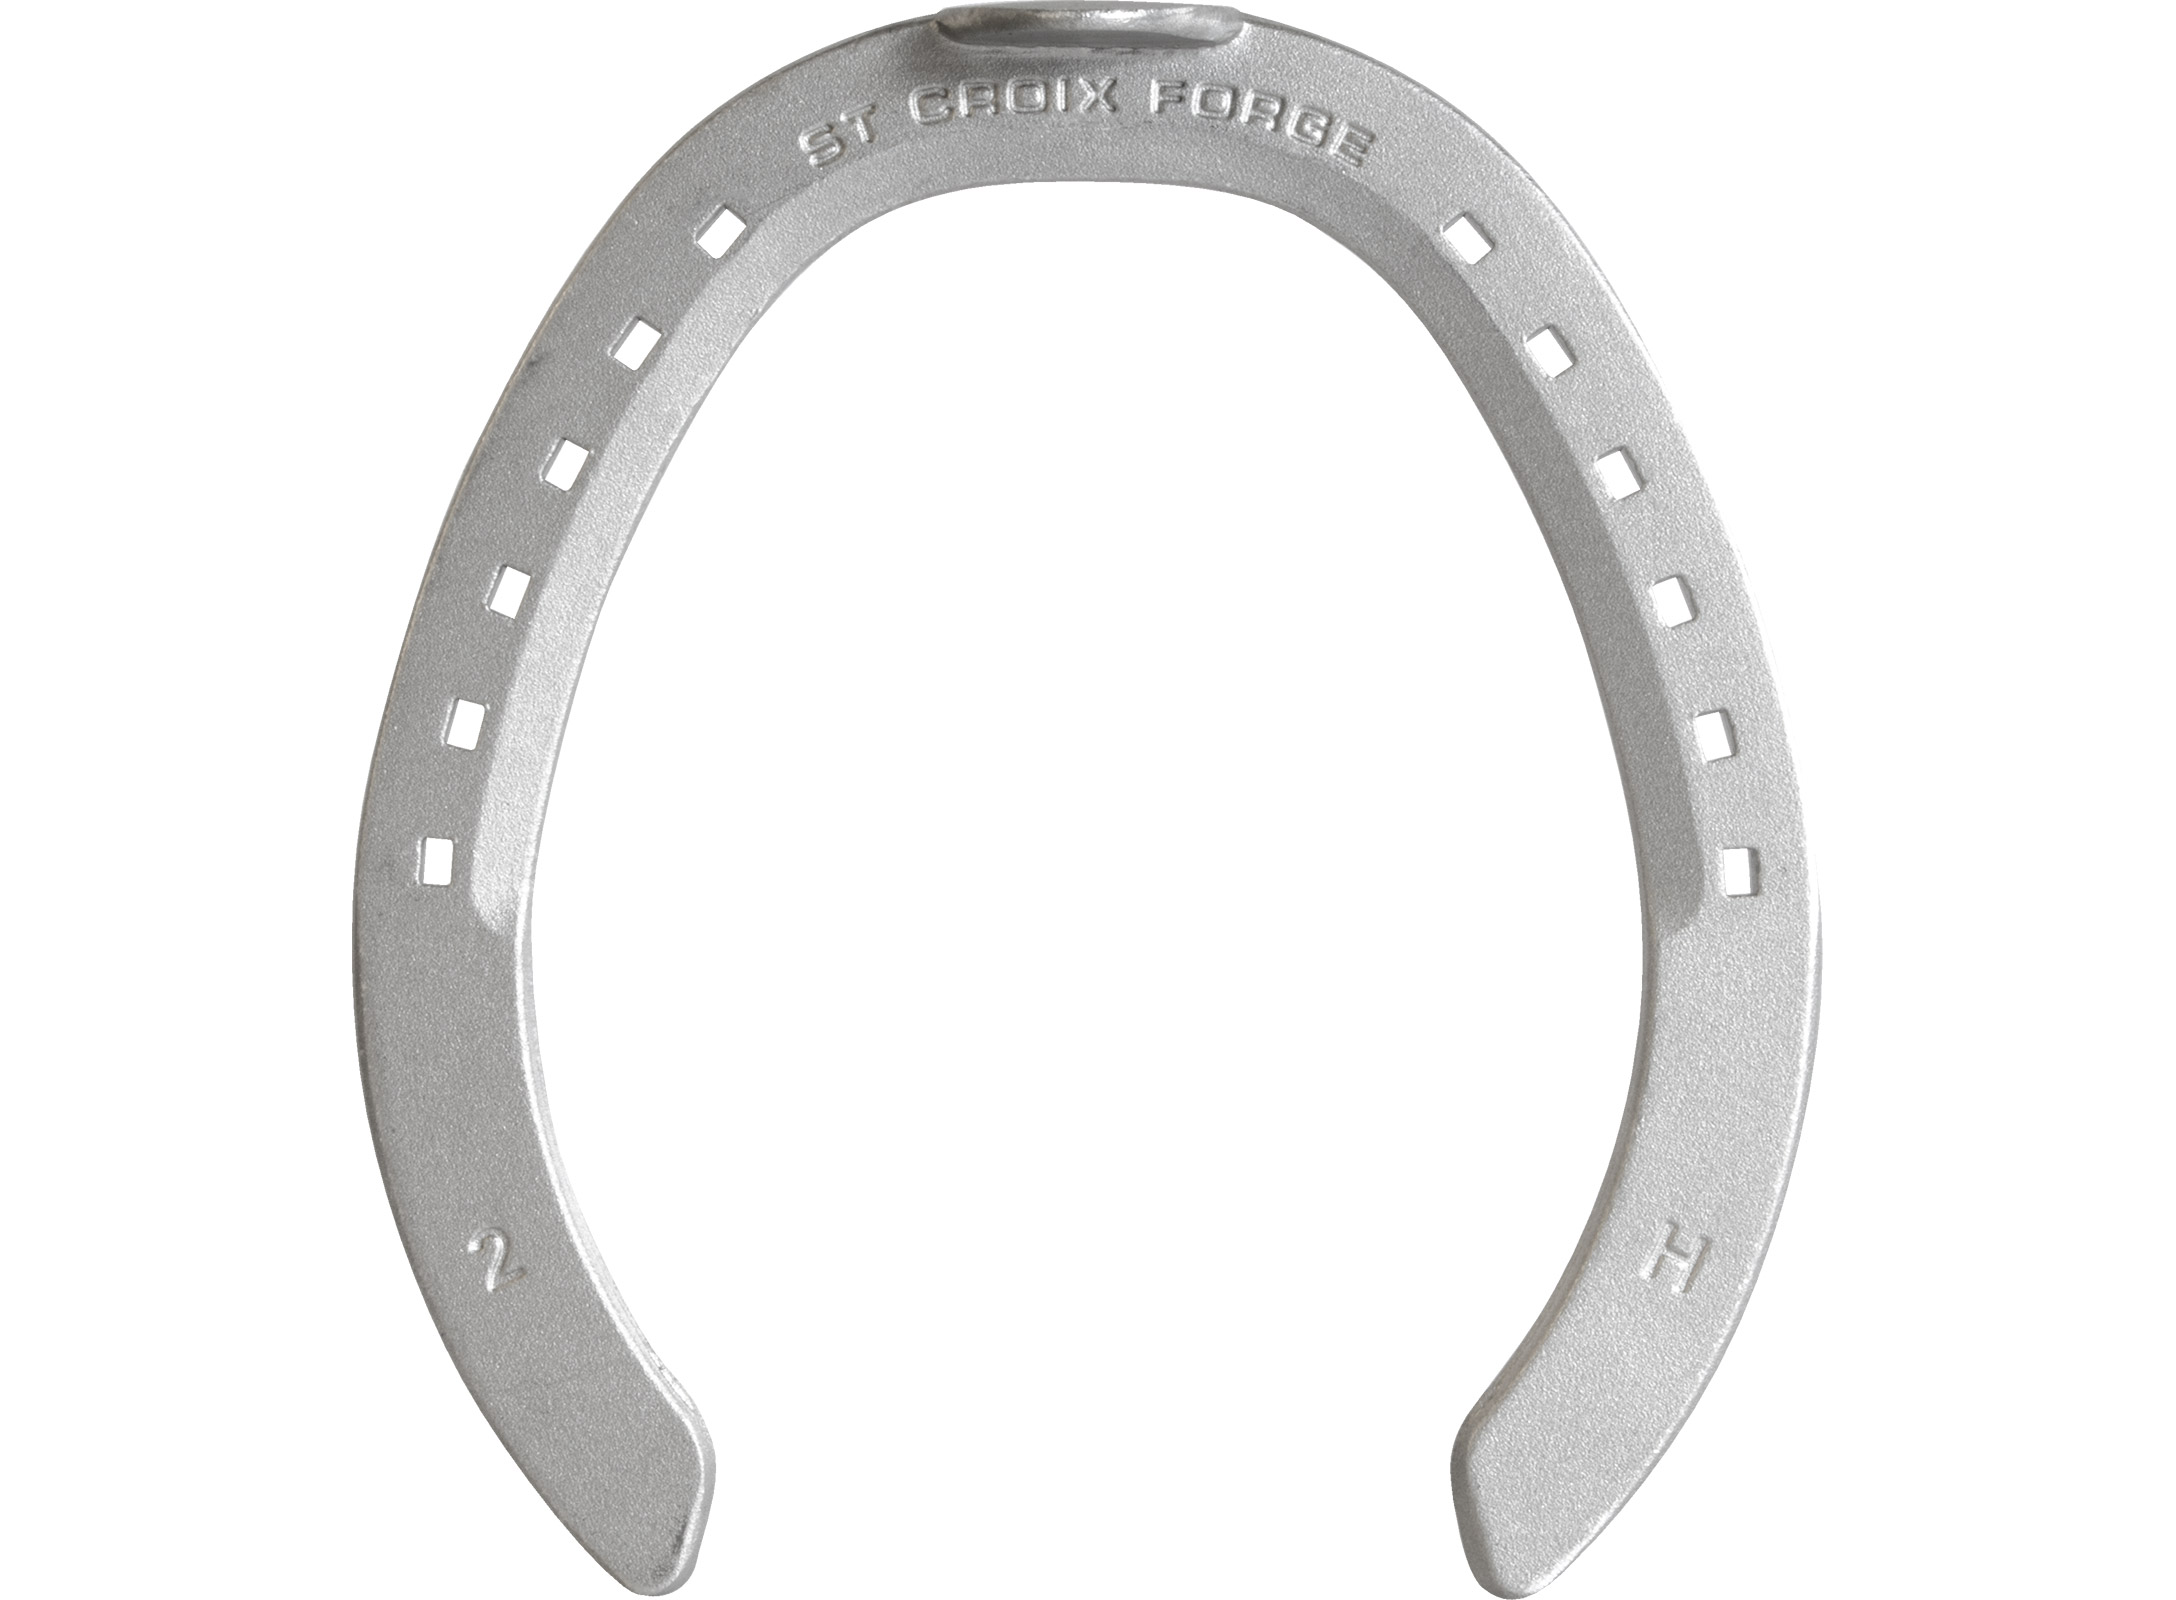 St. Croix Rapid Fullered Aluminium horseshoe, hoof side view